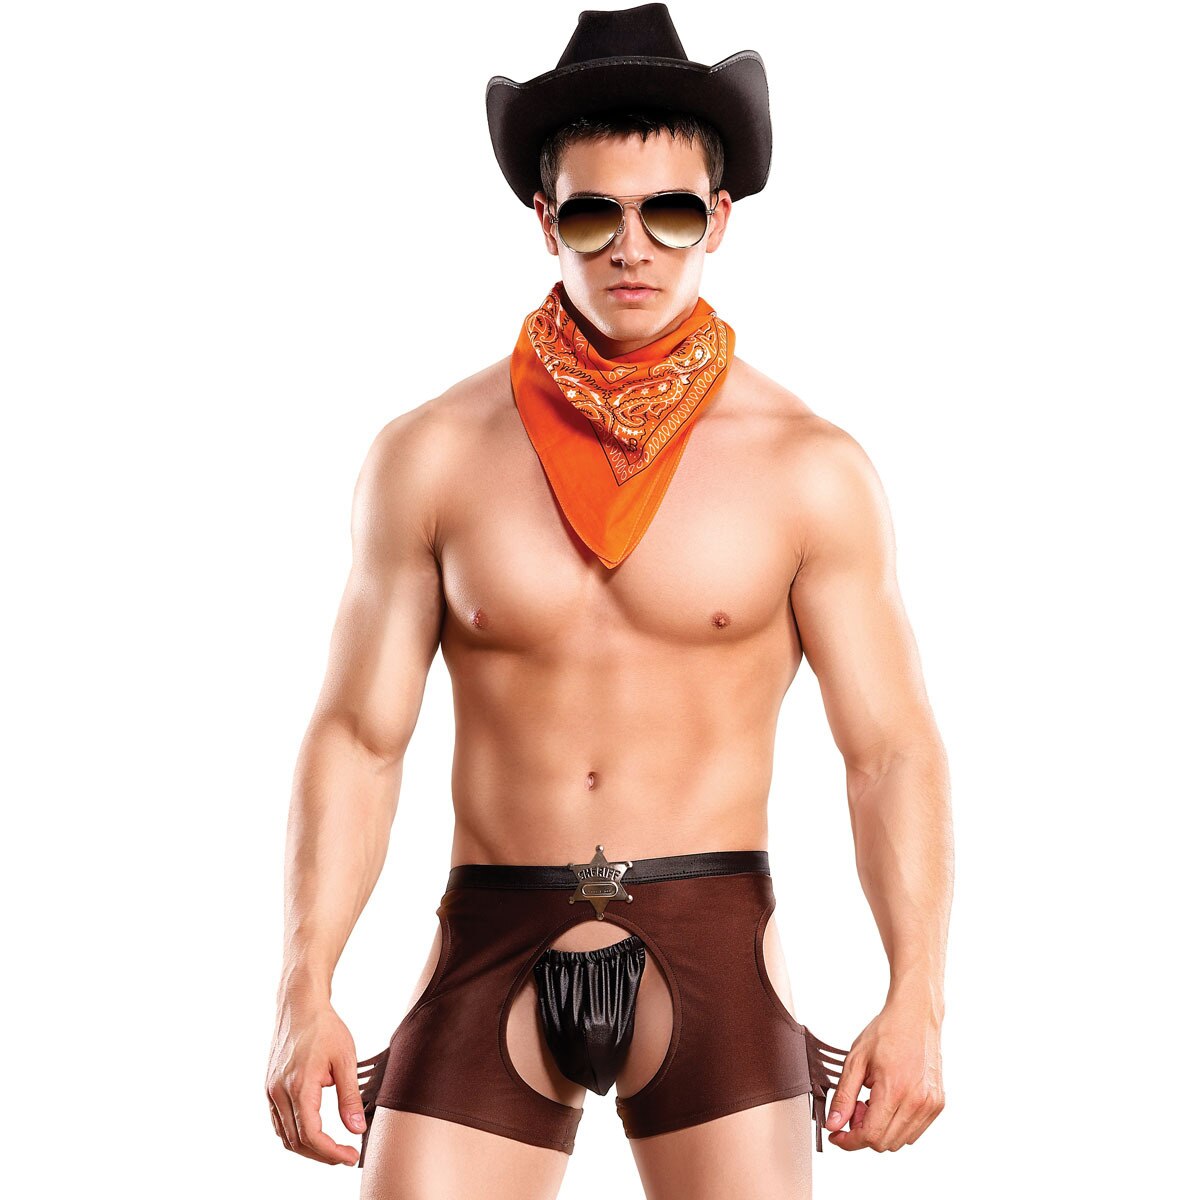 Cocky Cowboy Costume